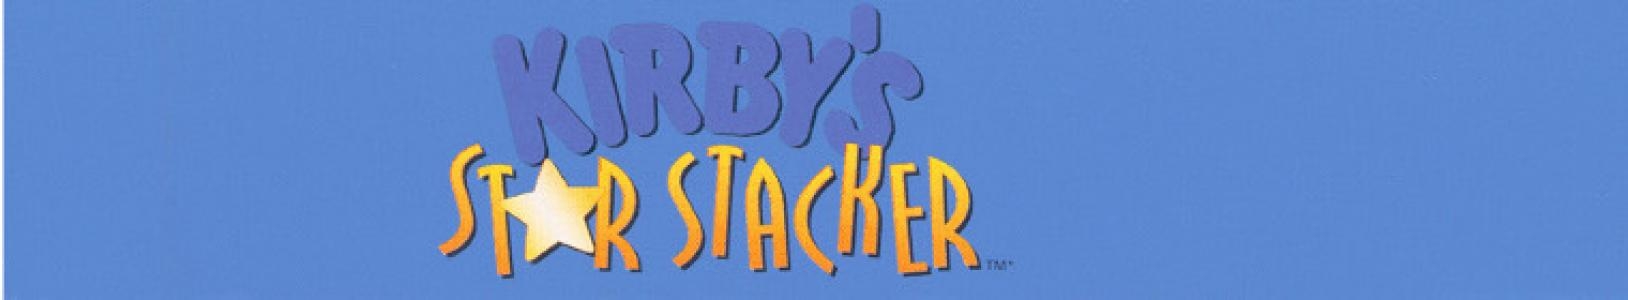 Kirby's Star Stacker banner